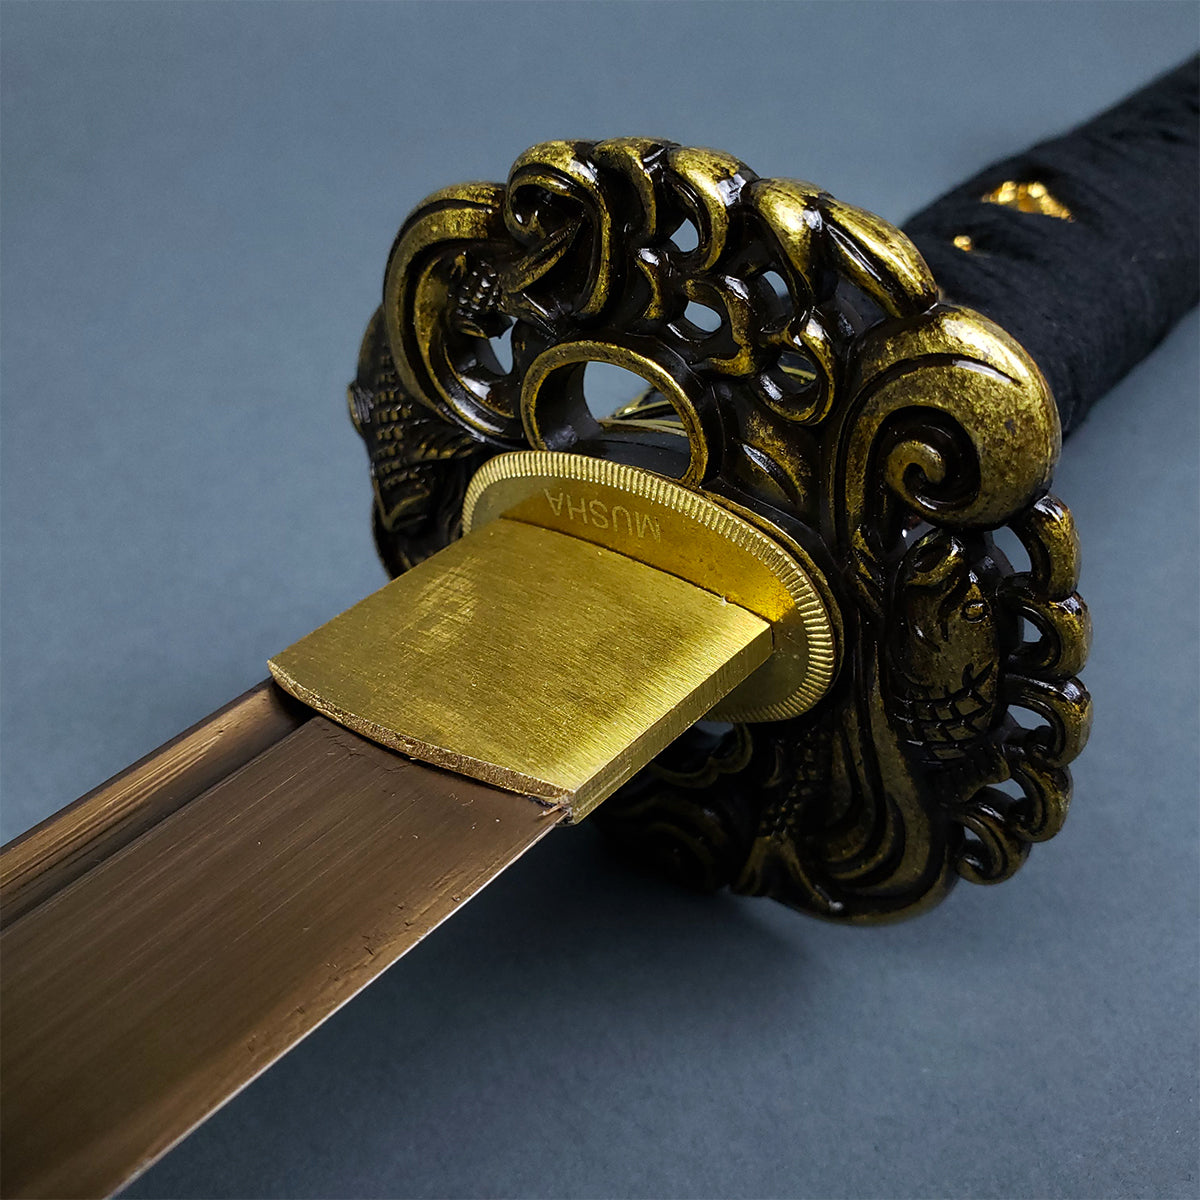 Musha Golden Koi Katana - Authentic Musashi Sword